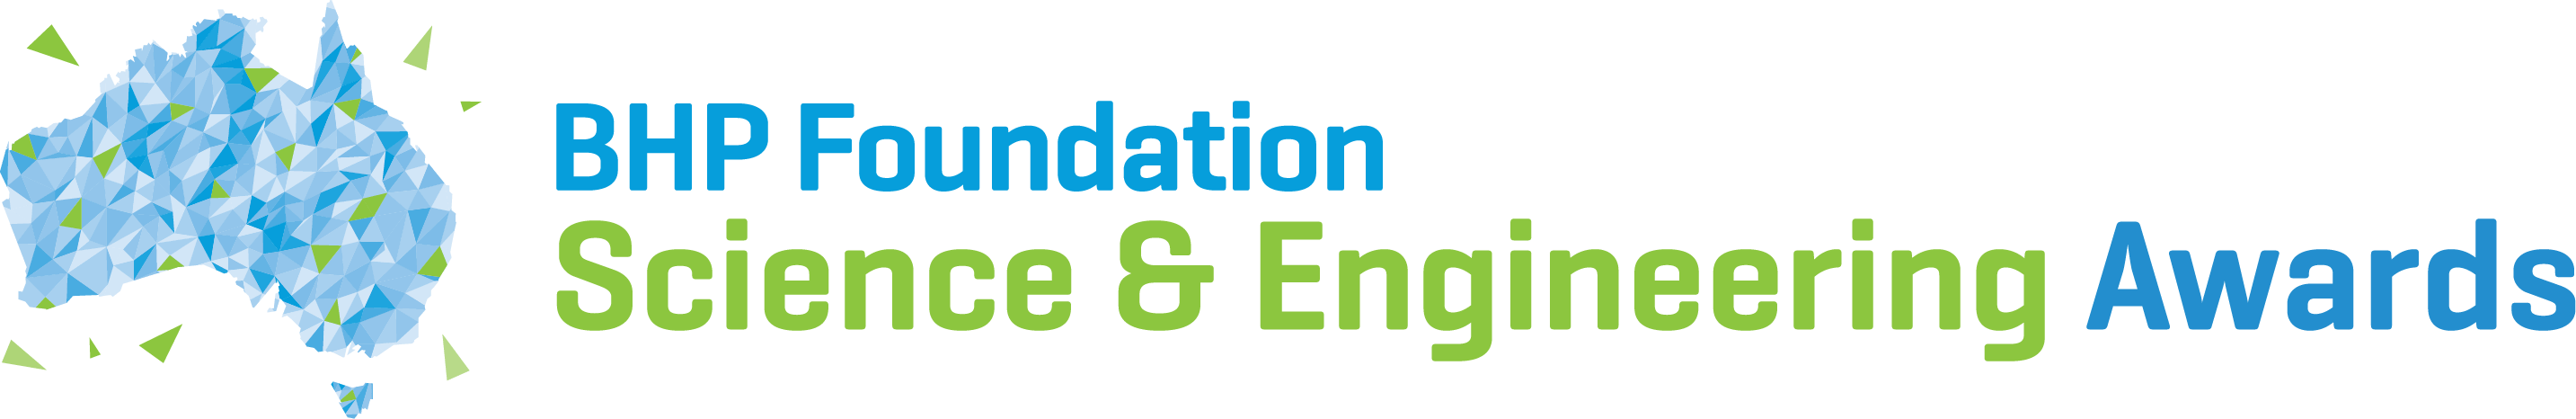 BHP Logo - BHP Foundation Science & Engineering Awards. BHP Science Awards